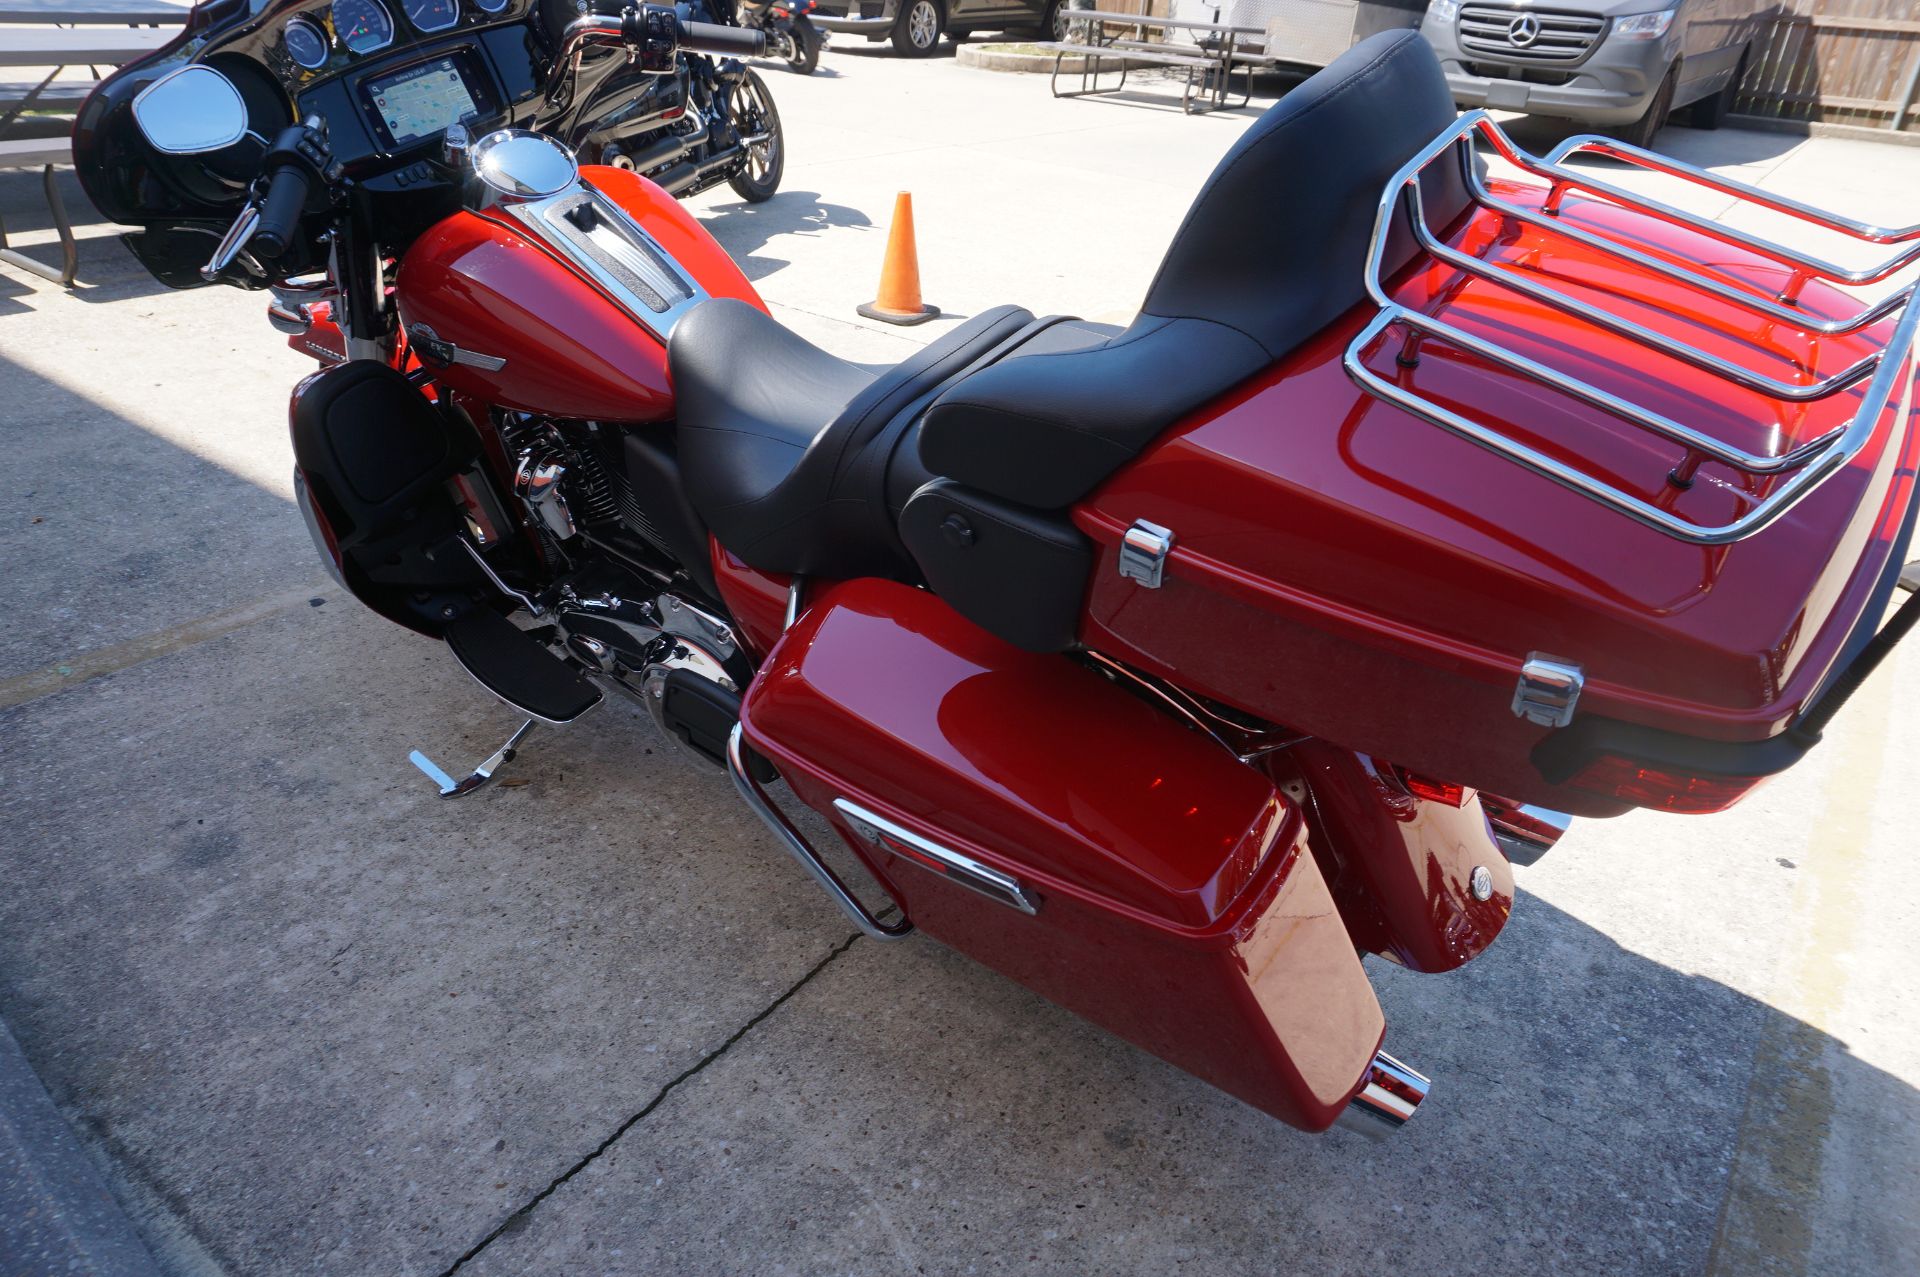 2023 Harley-Davidson Ultra Limited in Metairie, Louisiana - Photo 9